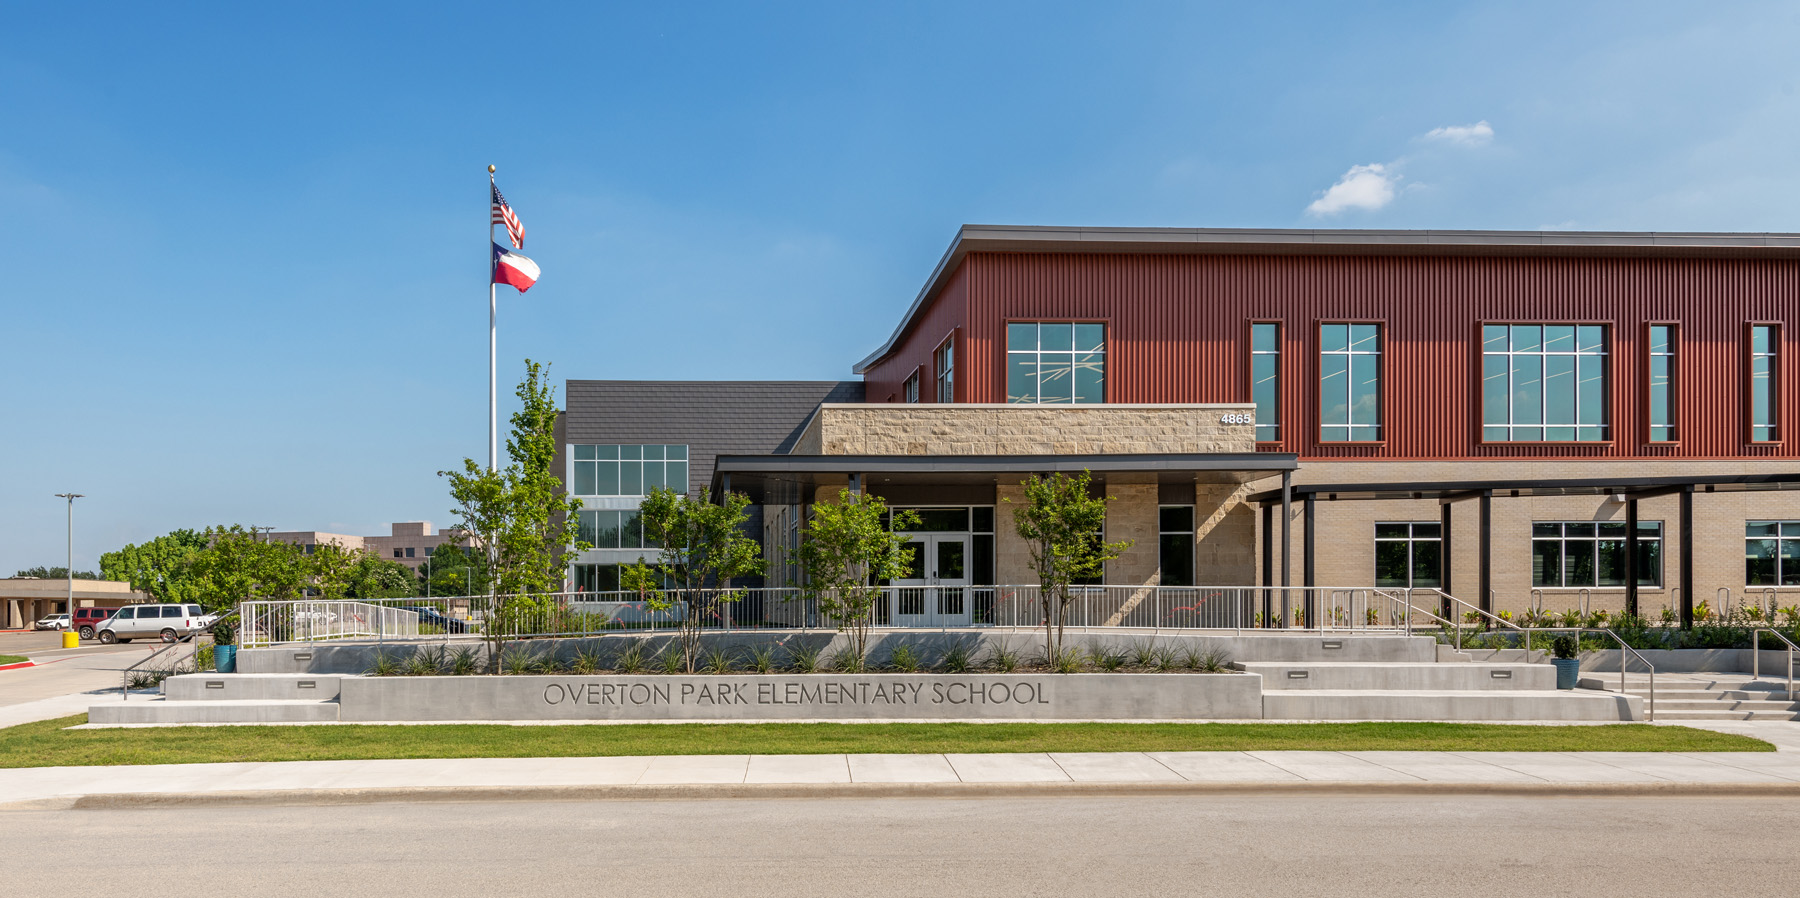 Overton Park Elementary School